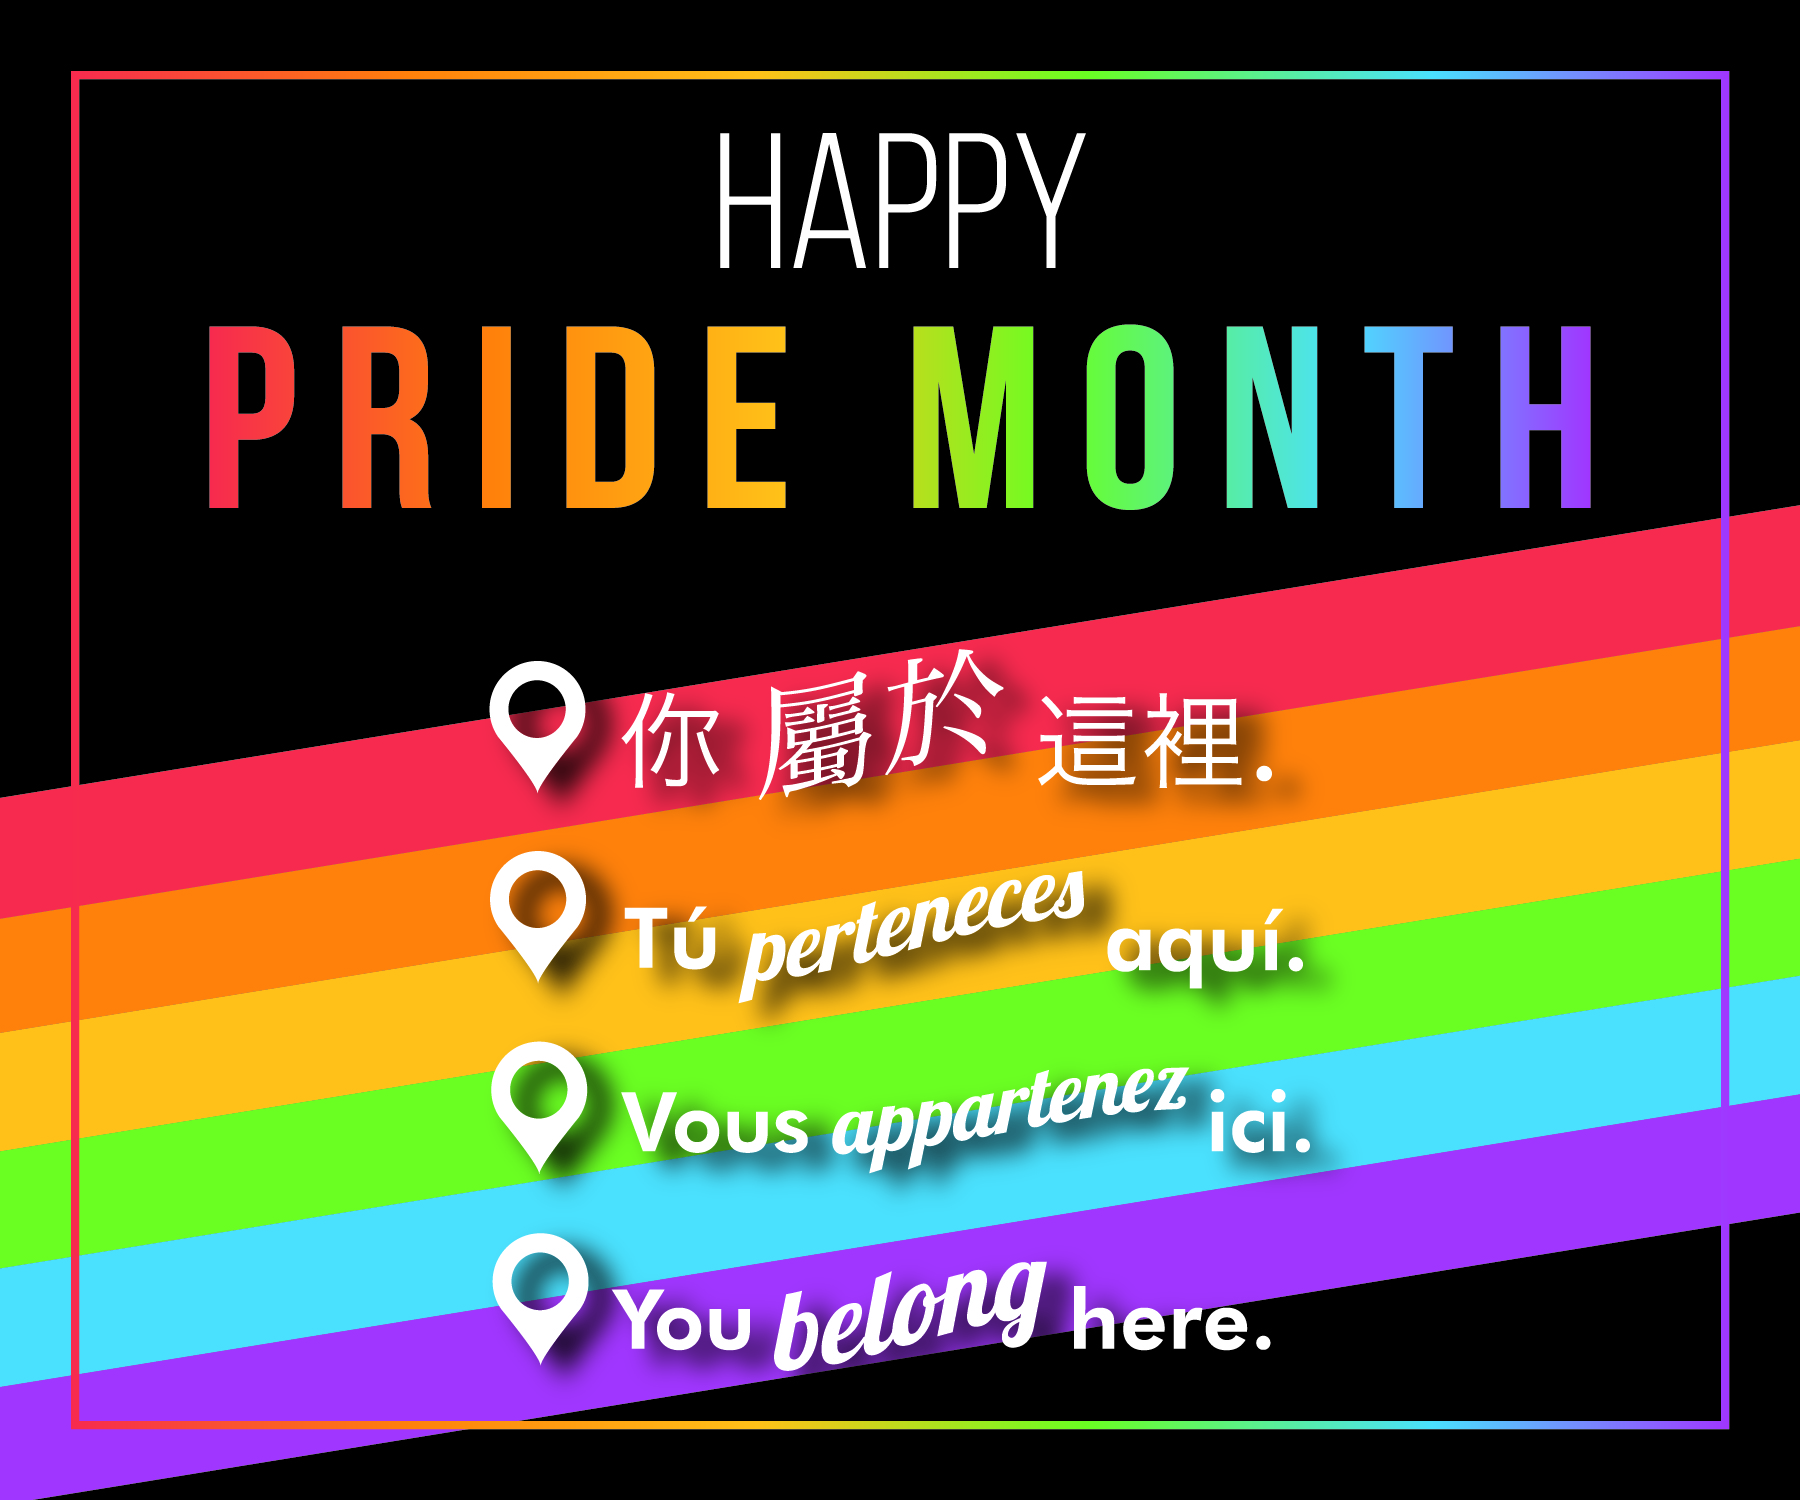 Happy Pride Month General News News Urbana Park District